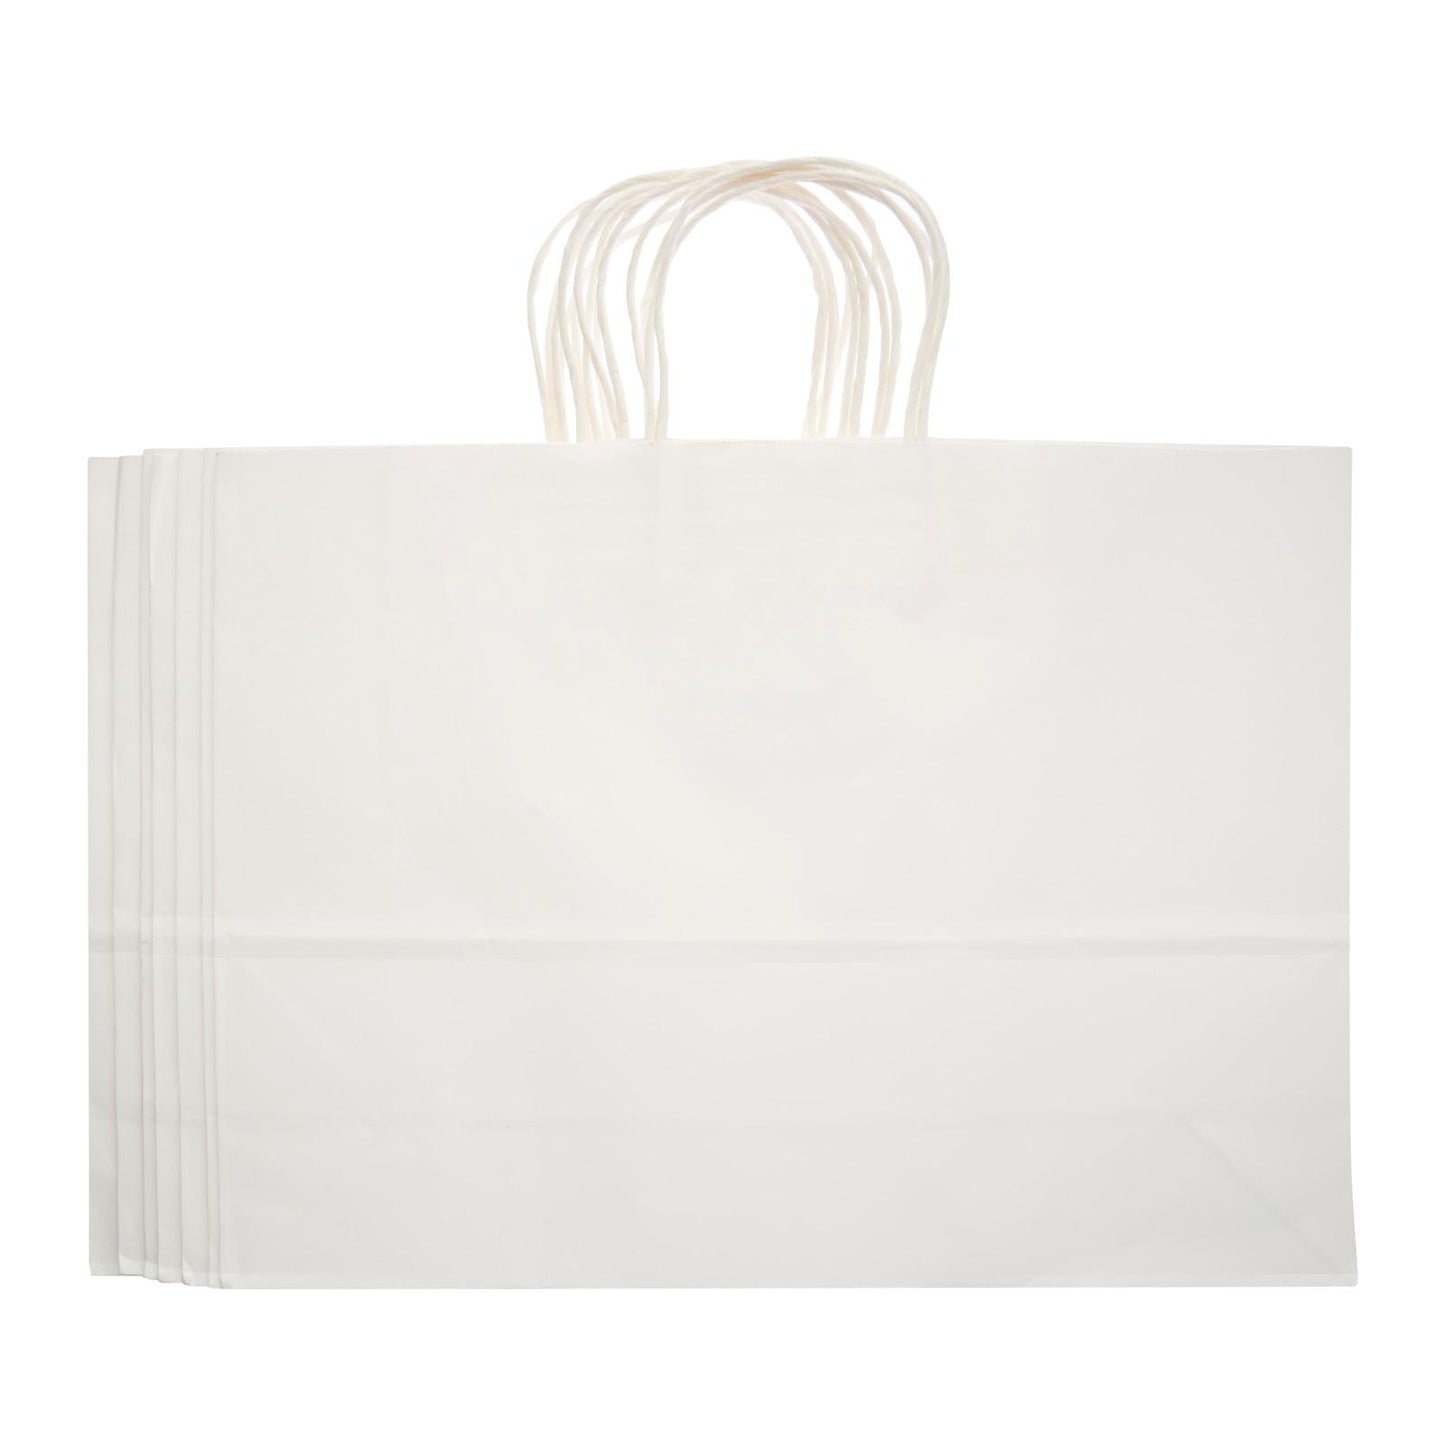 42cm x 31cm x 13cm Kraft Paper Bag